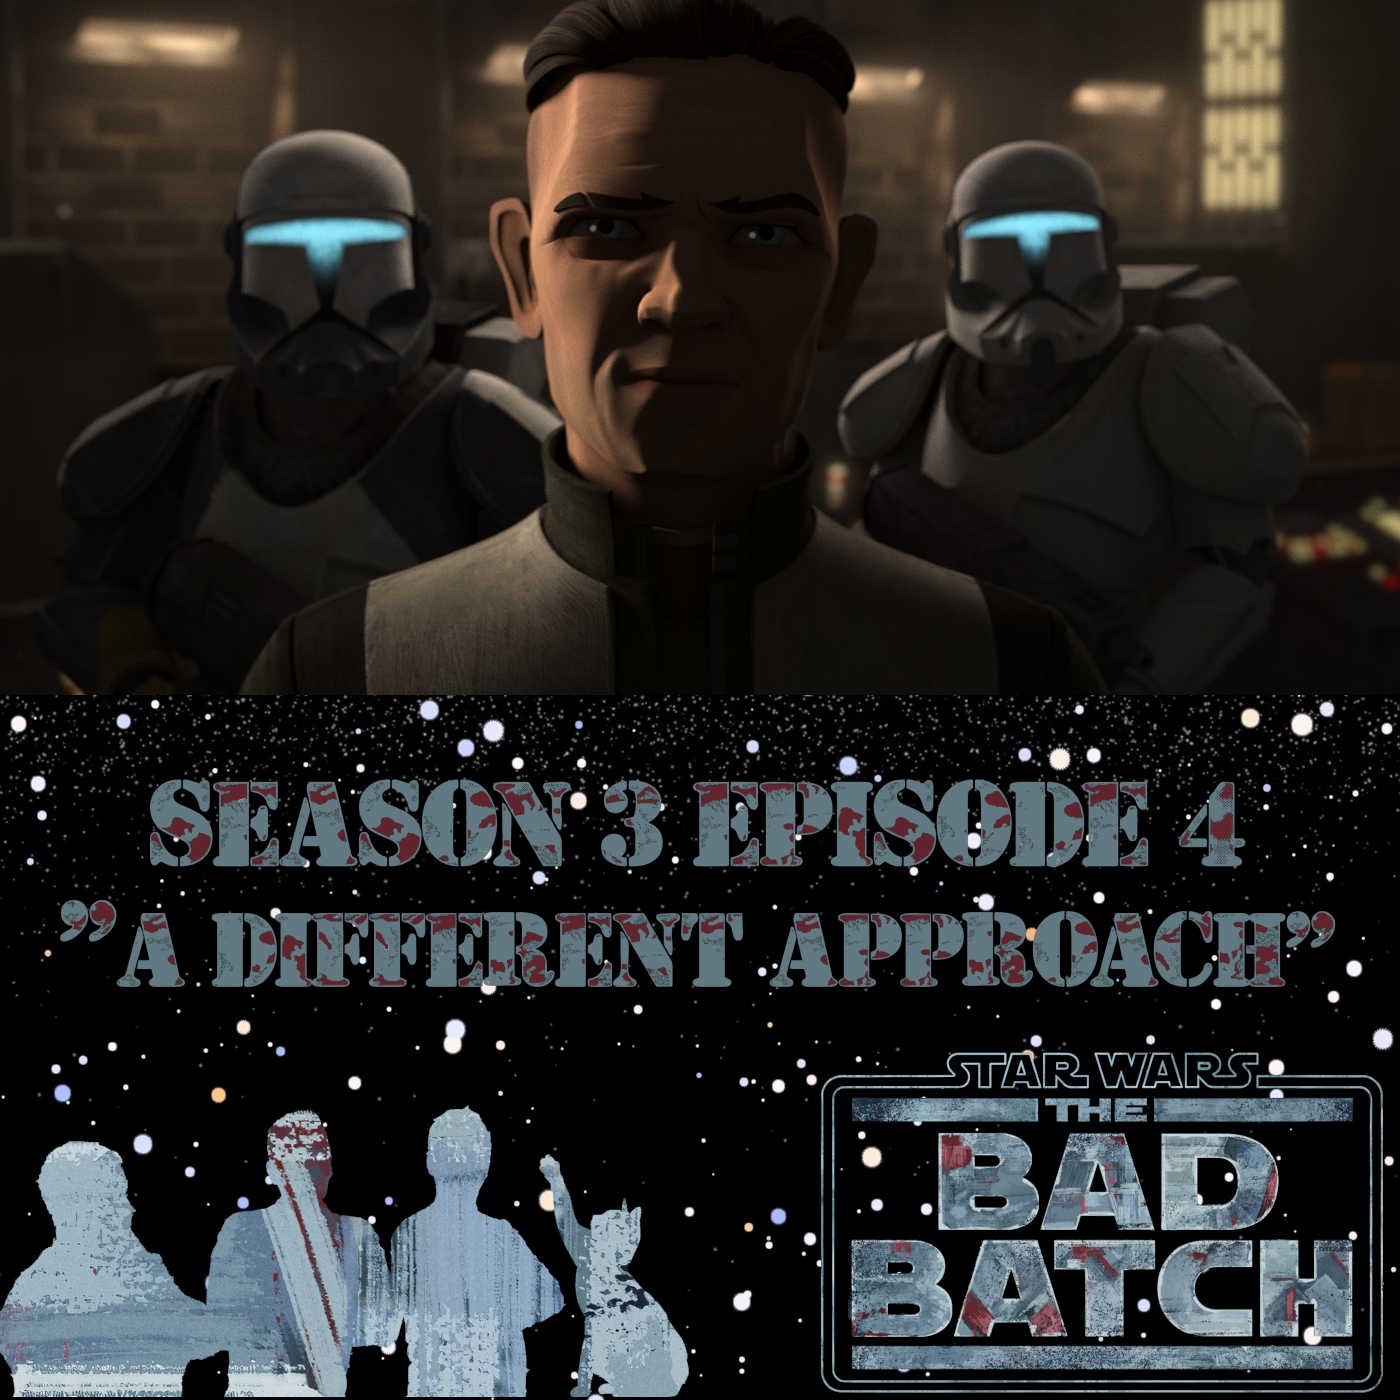 Star Wars The Bad Batch Batch 304 Podcast